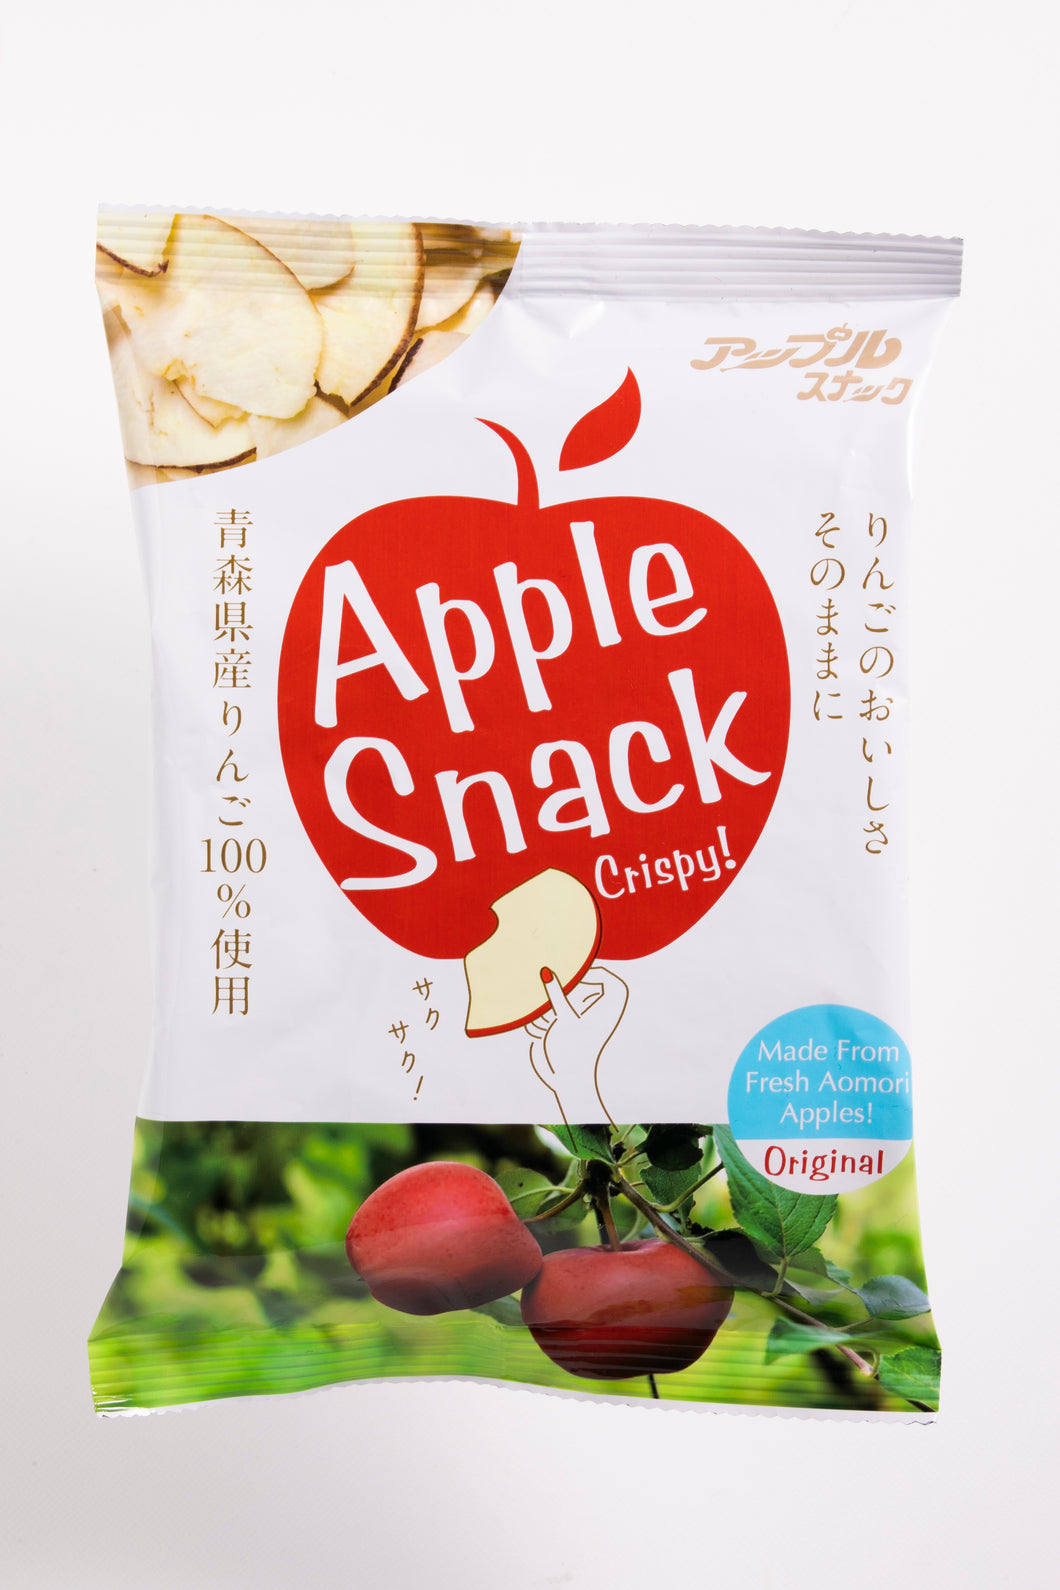 AppleSnack Original